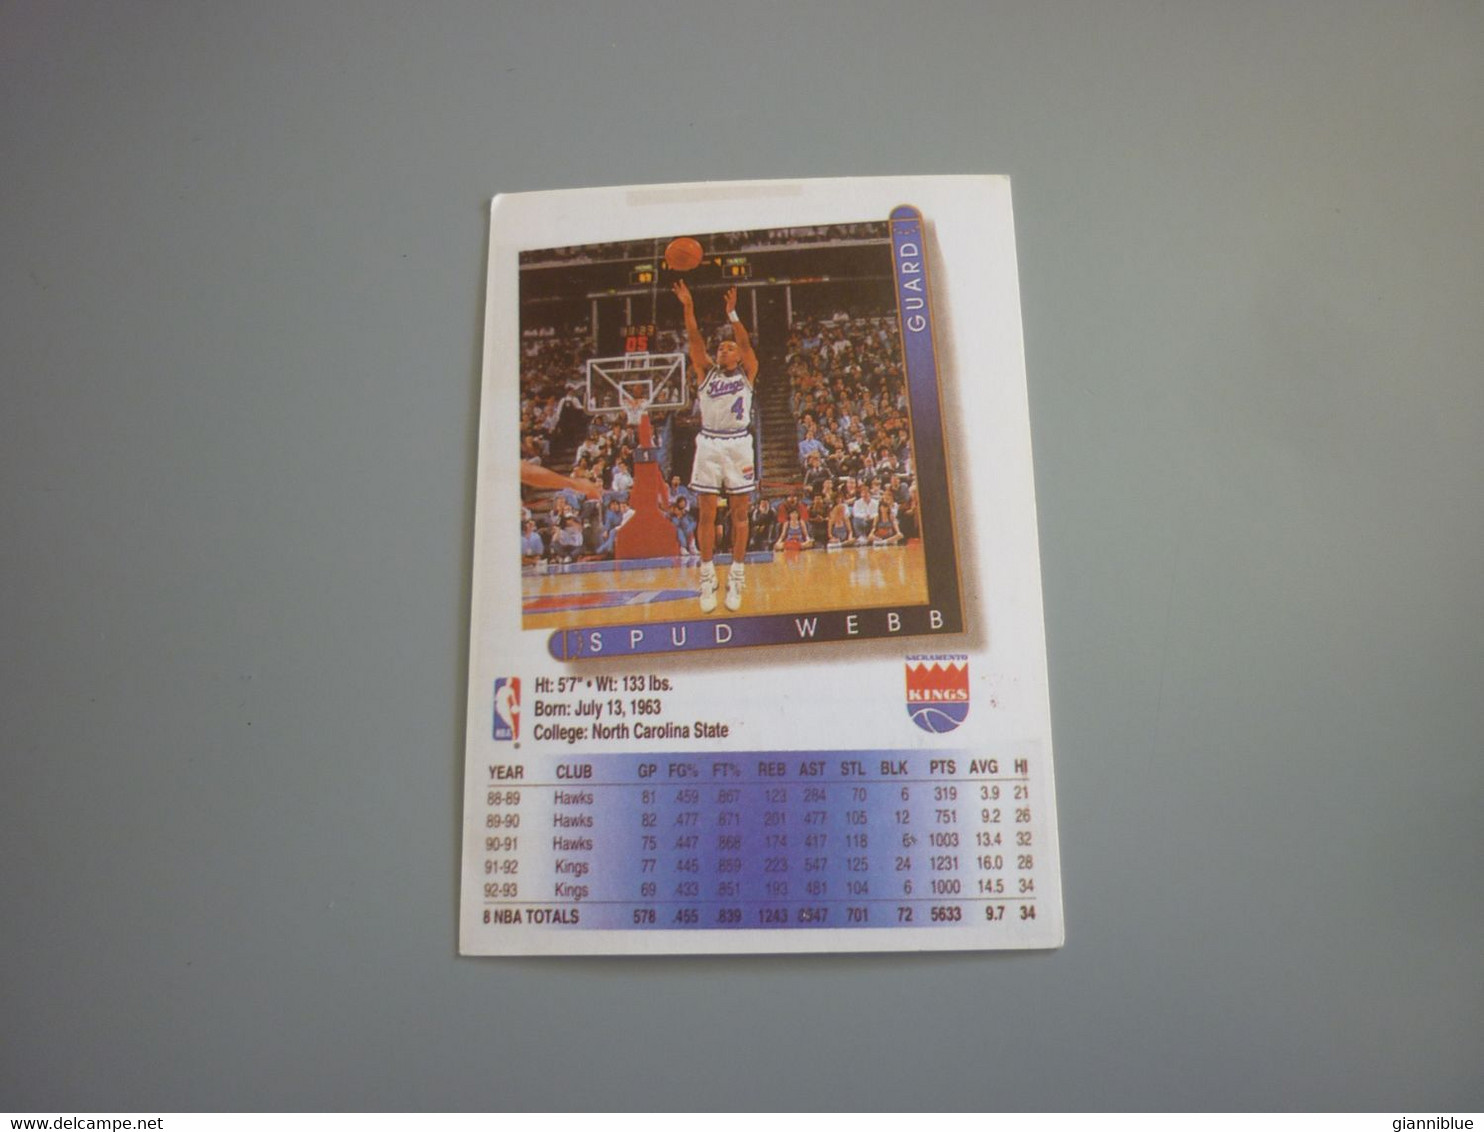 Spud Webb Sacramento Kings NBA Basketball '90s Rare Greek Edition Card - 1990-1999